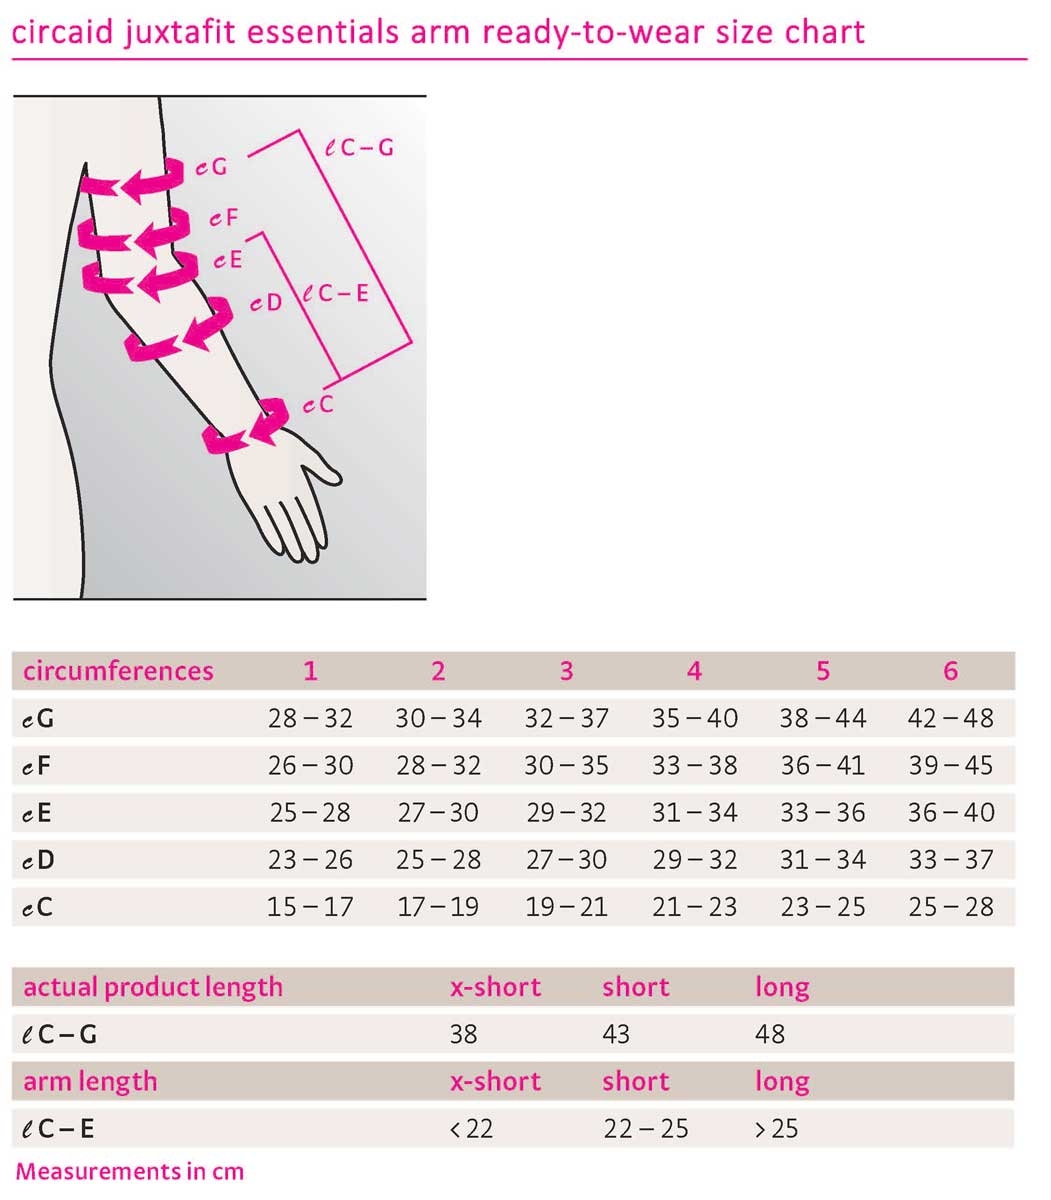 circaid juxta-fit essentials armsleeve size chart